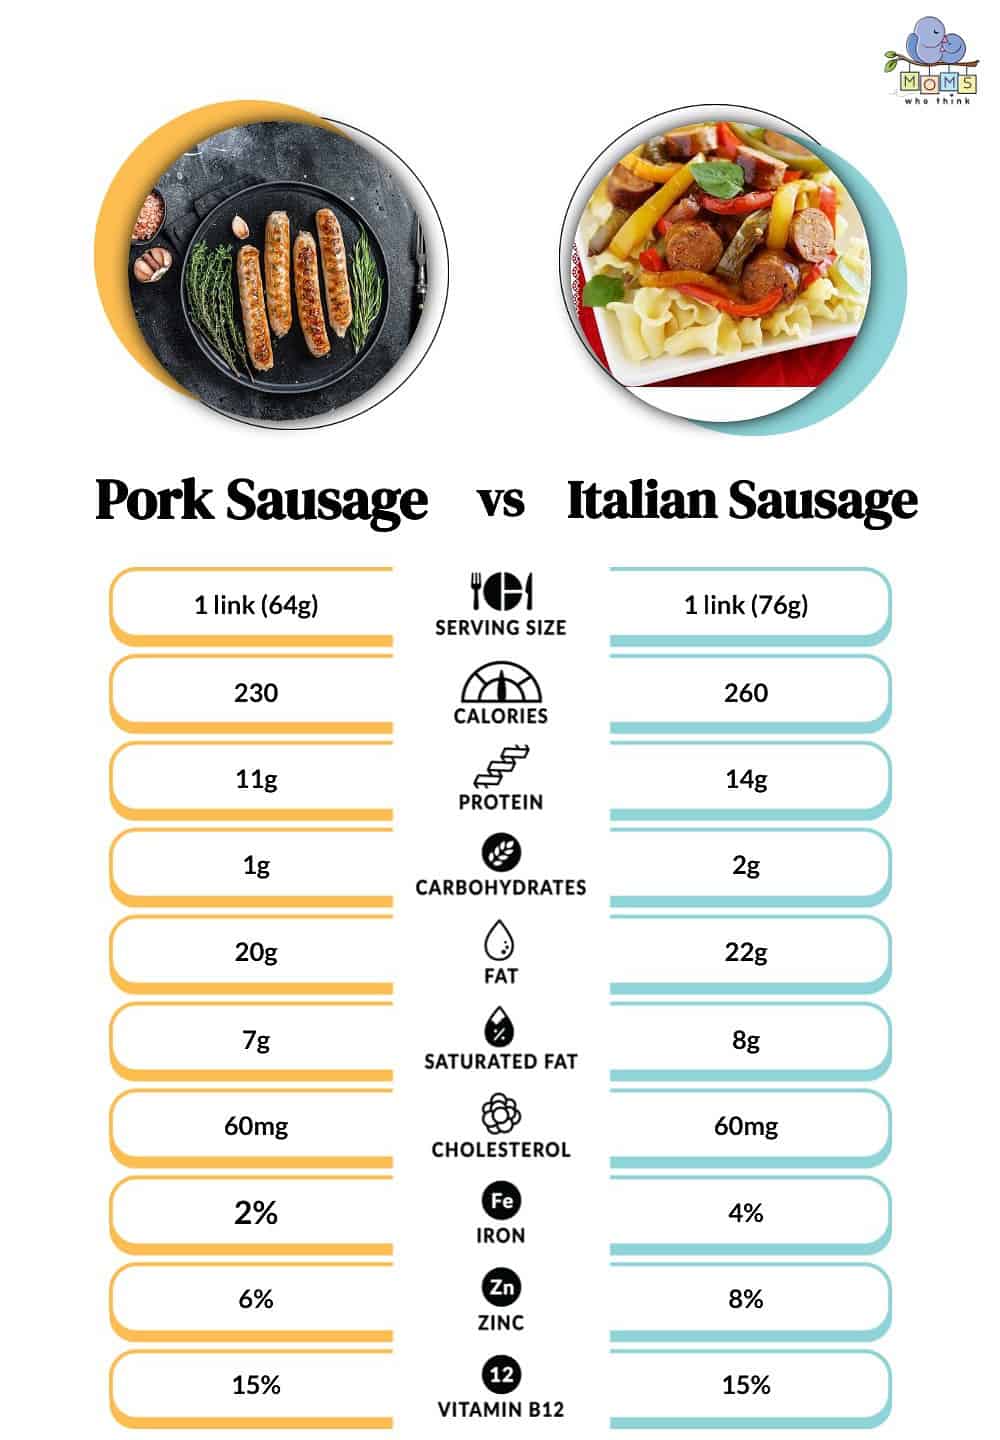 Pork Sausage vs Italian Sausage Nutritional Facts